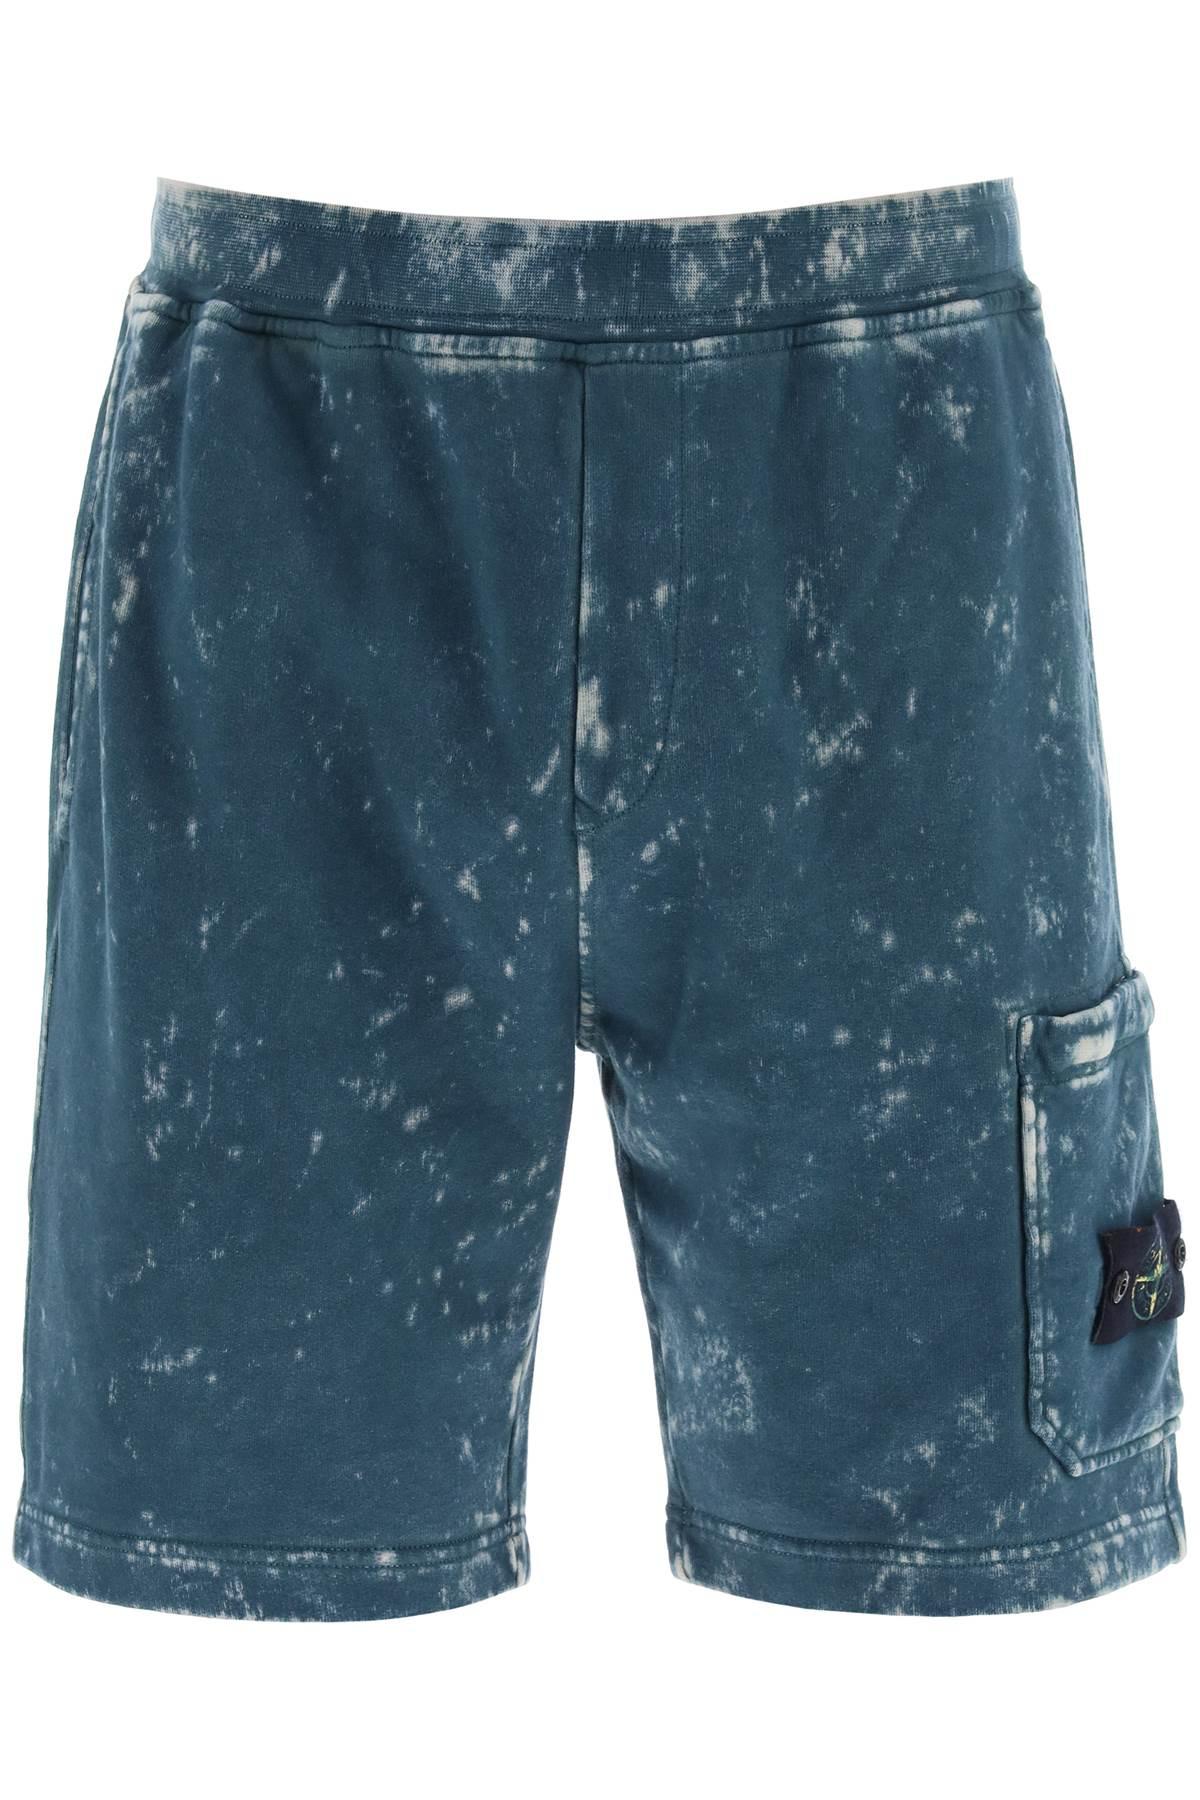 Stone Island Off-dye Ovd Cotton Fleece Shorts in Blue for Men | Lyst